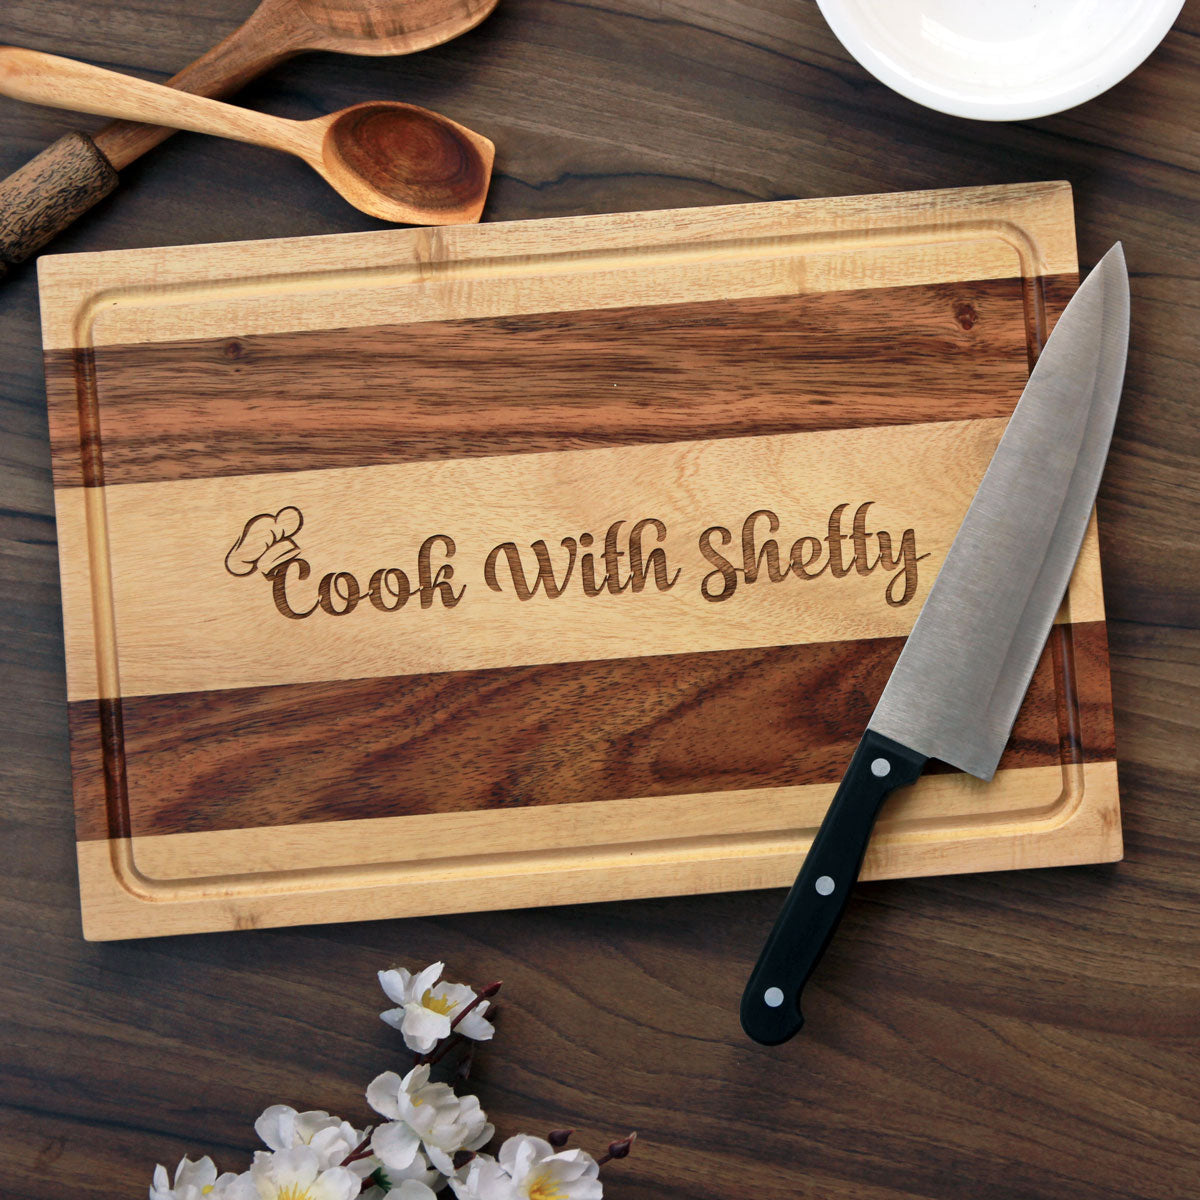 https://cdn.shopify.com/s/files/1/0941/2500/products/engraved-wooden-chopping-board-birch-sirish-striped-design-square_1600x.jpg?v=1650553243